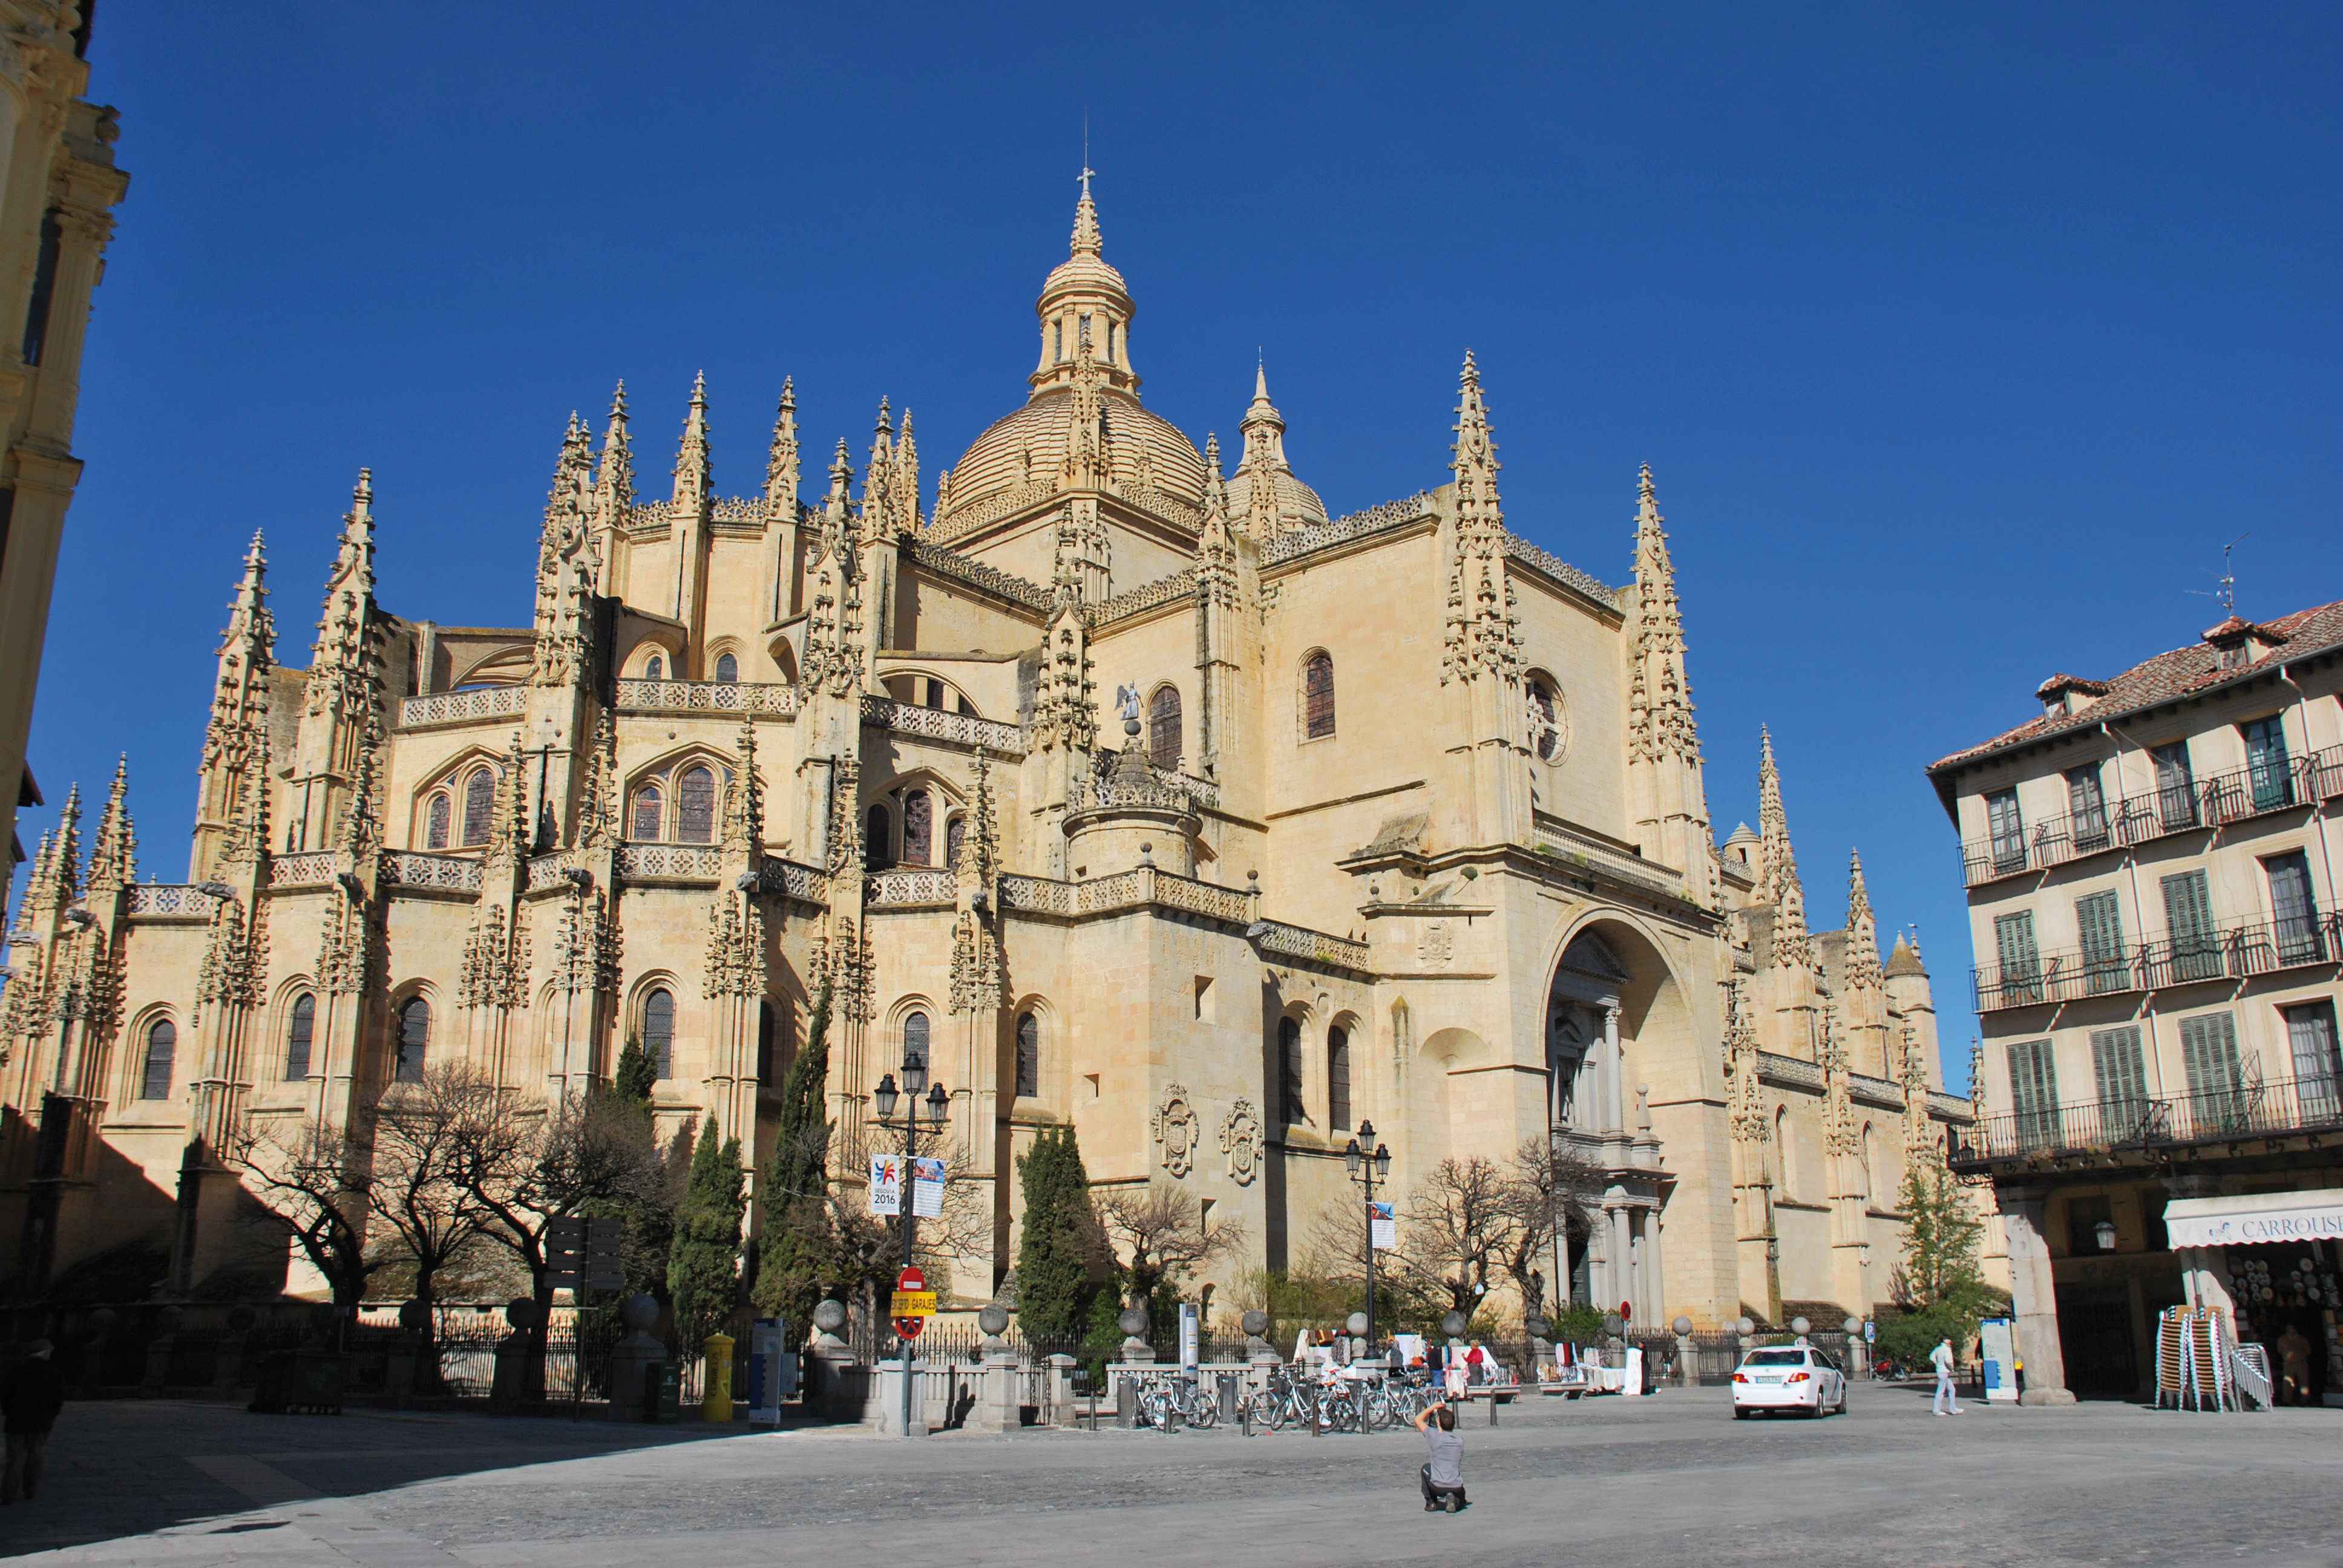 La Catedral de Segovia